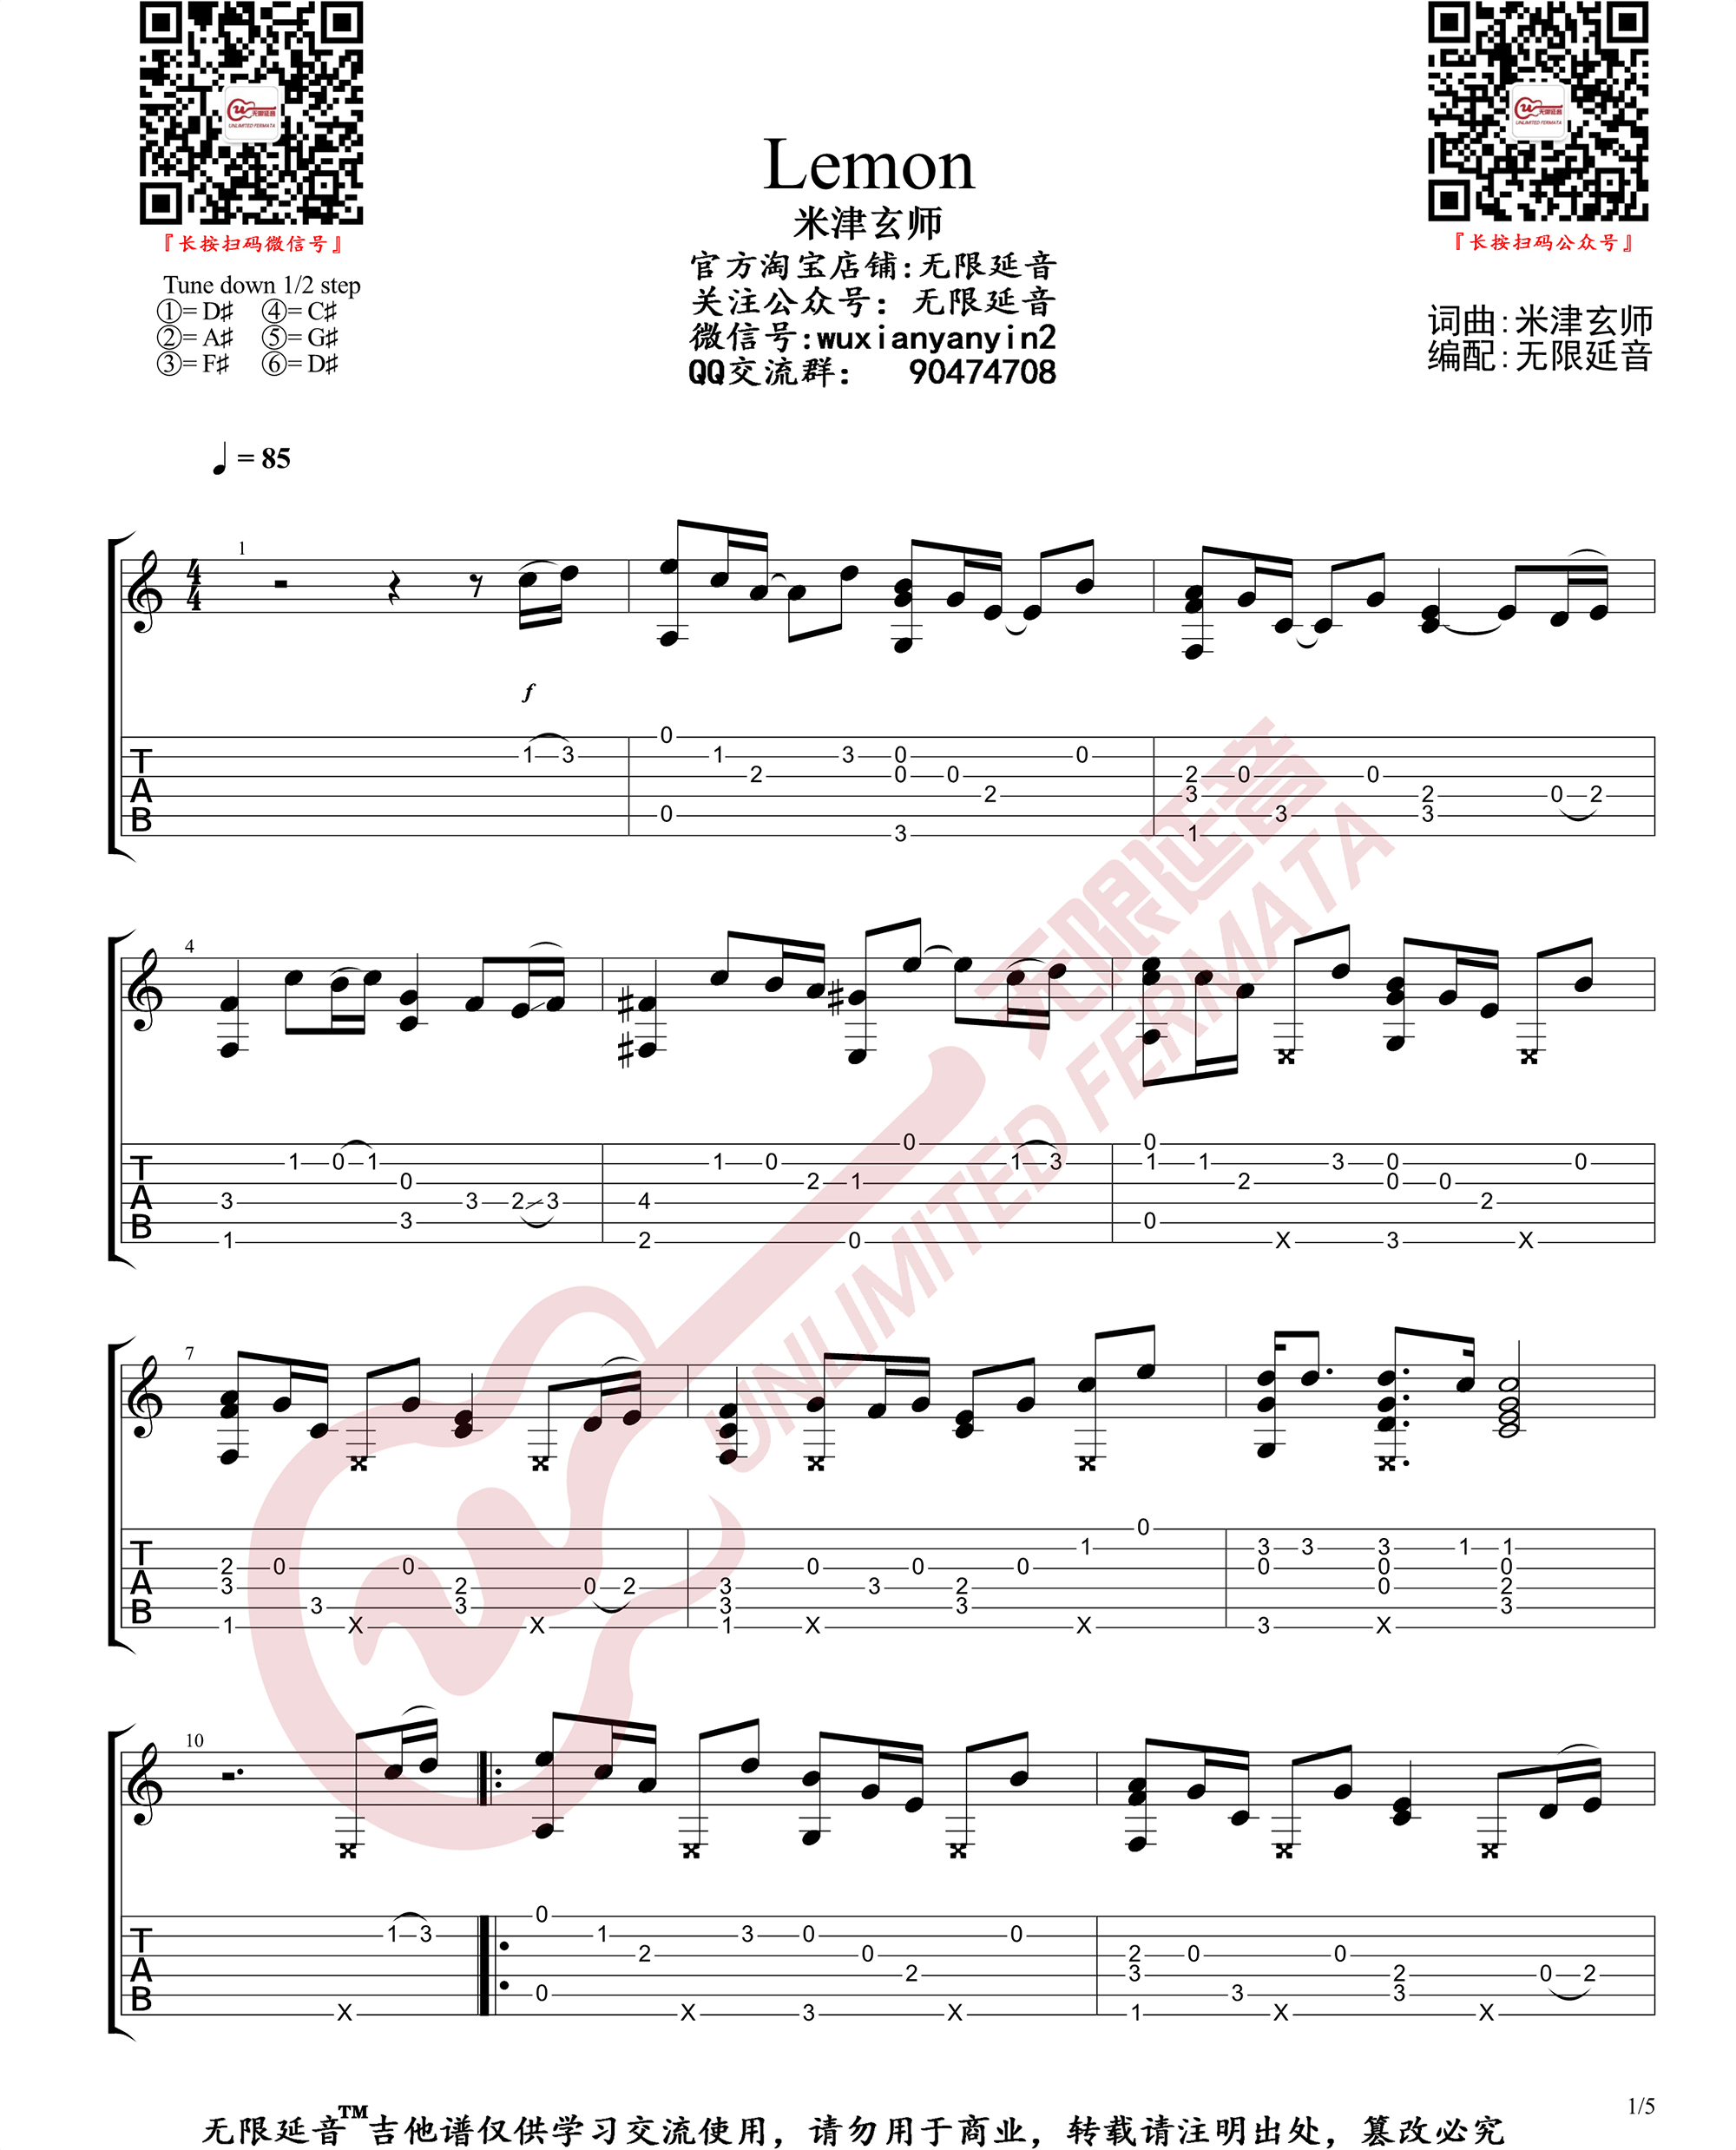 Lemon吉他谱,原版米津玄师歌曲,简单指弹曲谱,高清六线乐谱